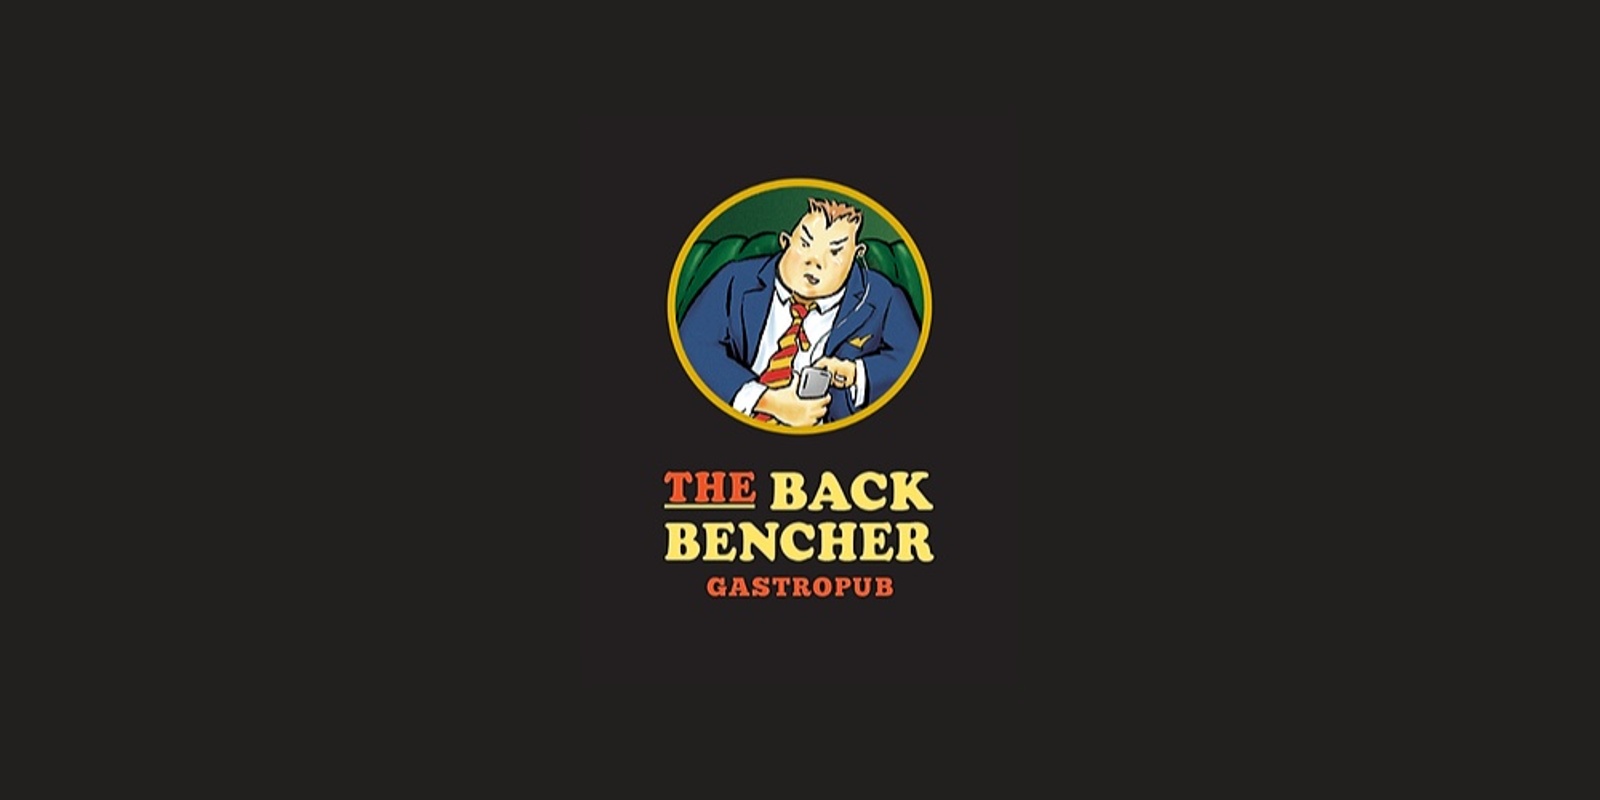 Banner image for The Backbencher Gastropub